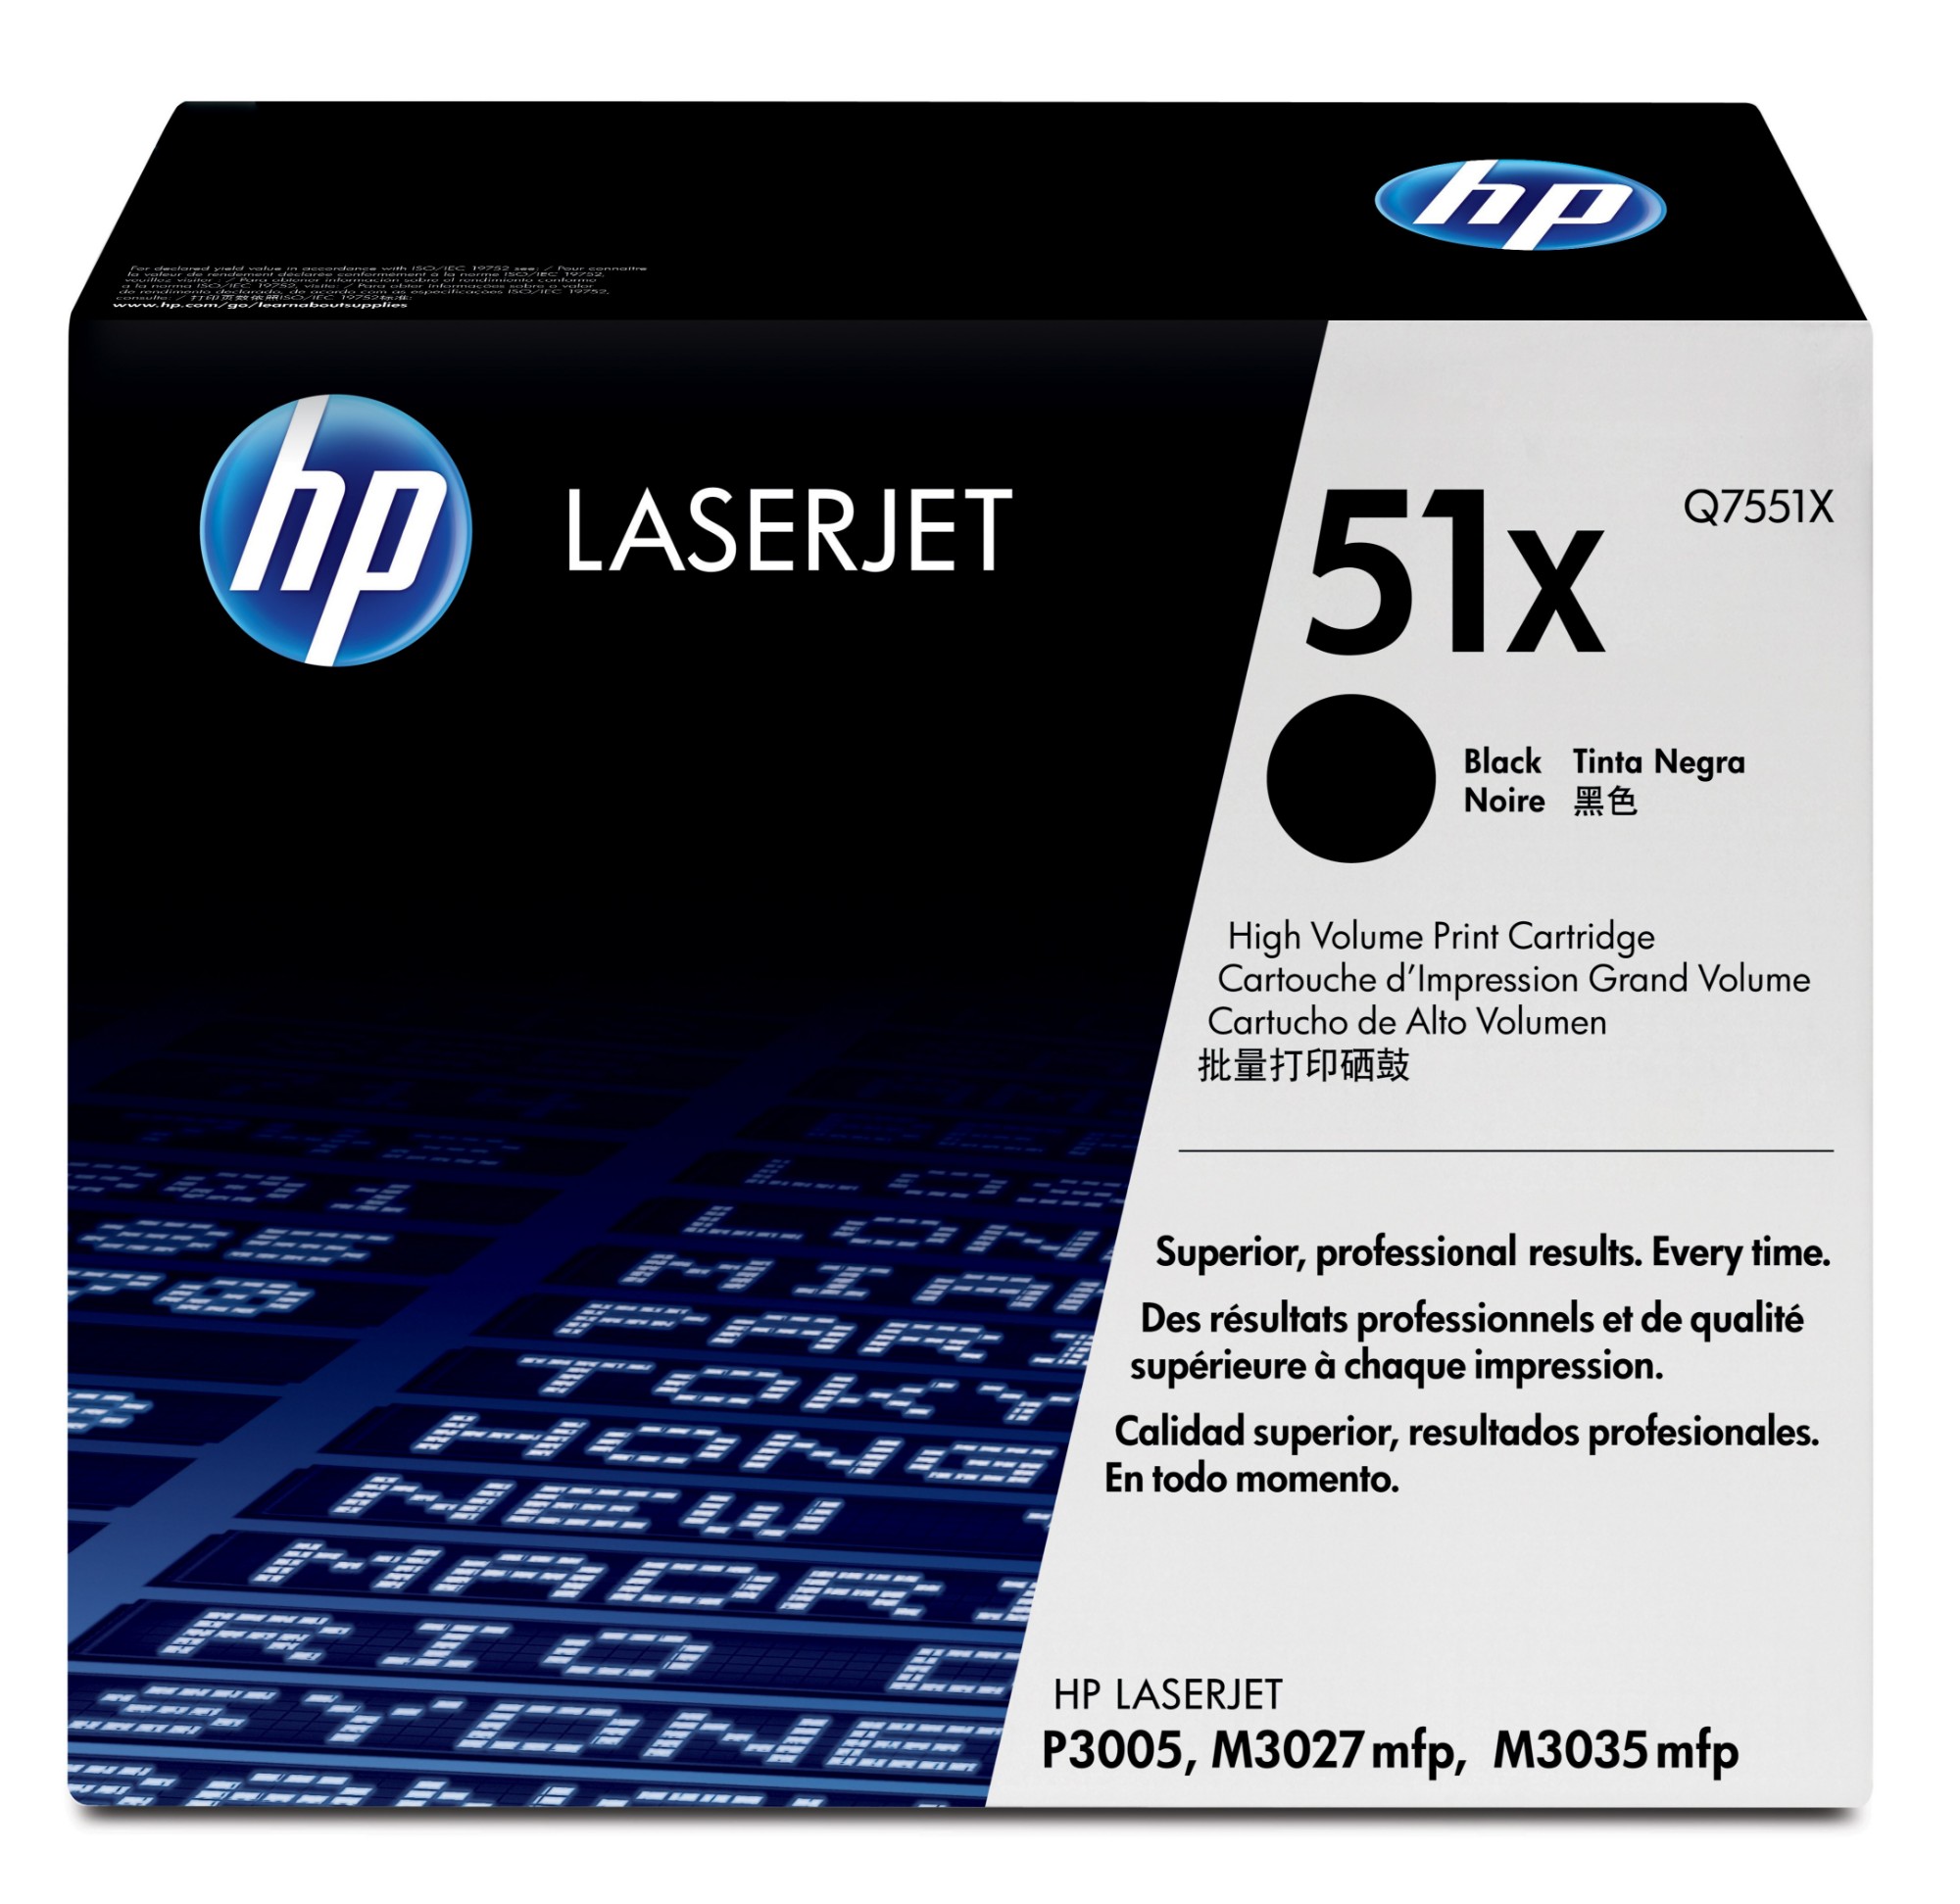 HP Q7551X/51X Toner cartridge black, 13K pages ISO/IEC 19752 for HP LaserJet P 3005